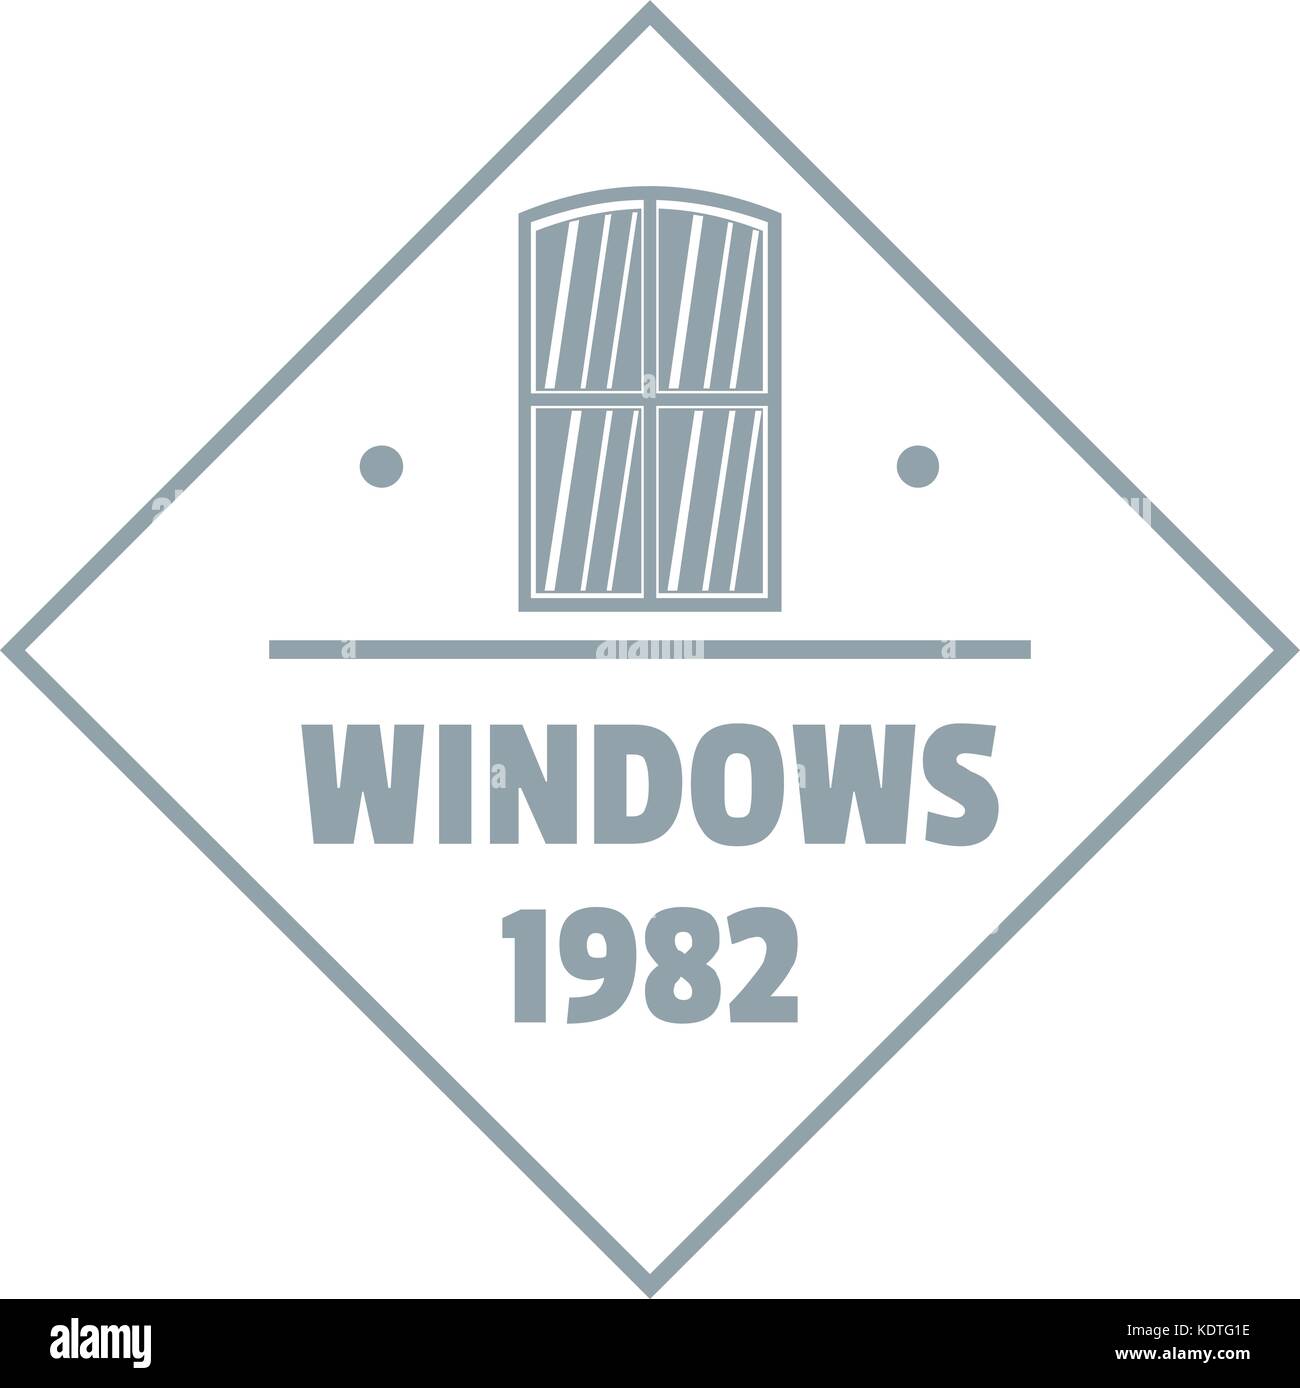 Window frame logo, gray monochrome style Stock Vector